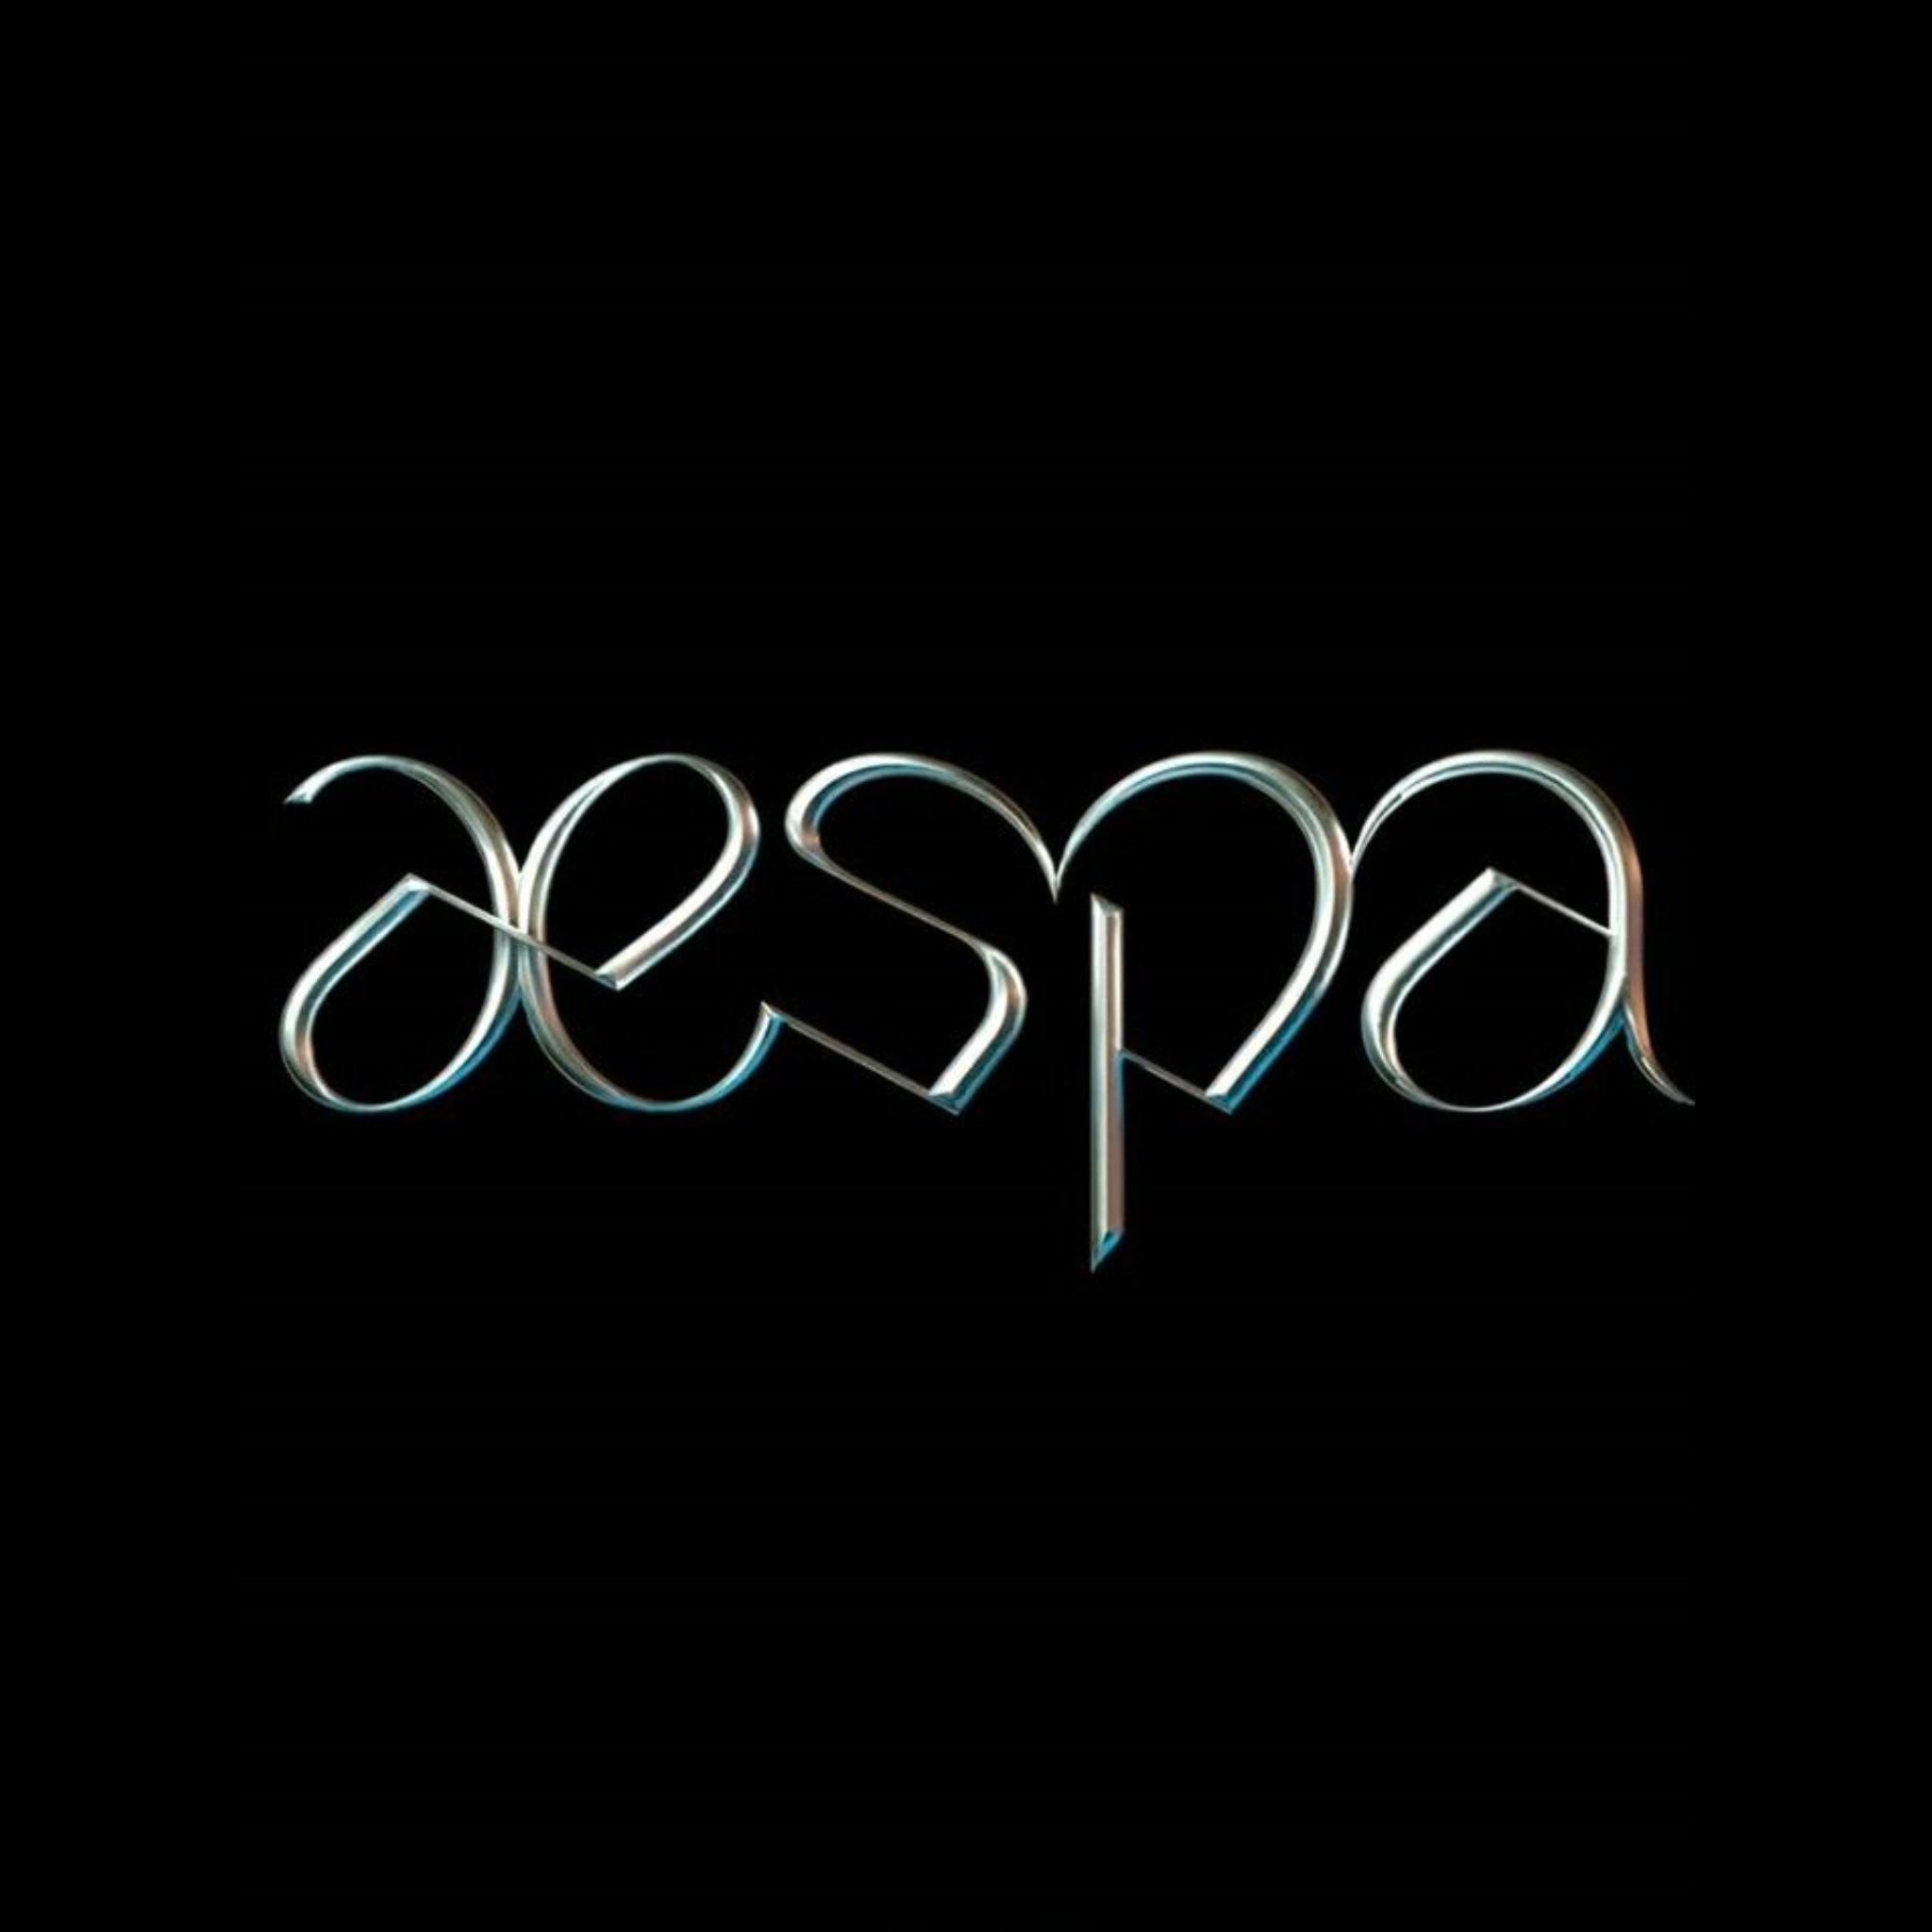 Aespa_Logo.png